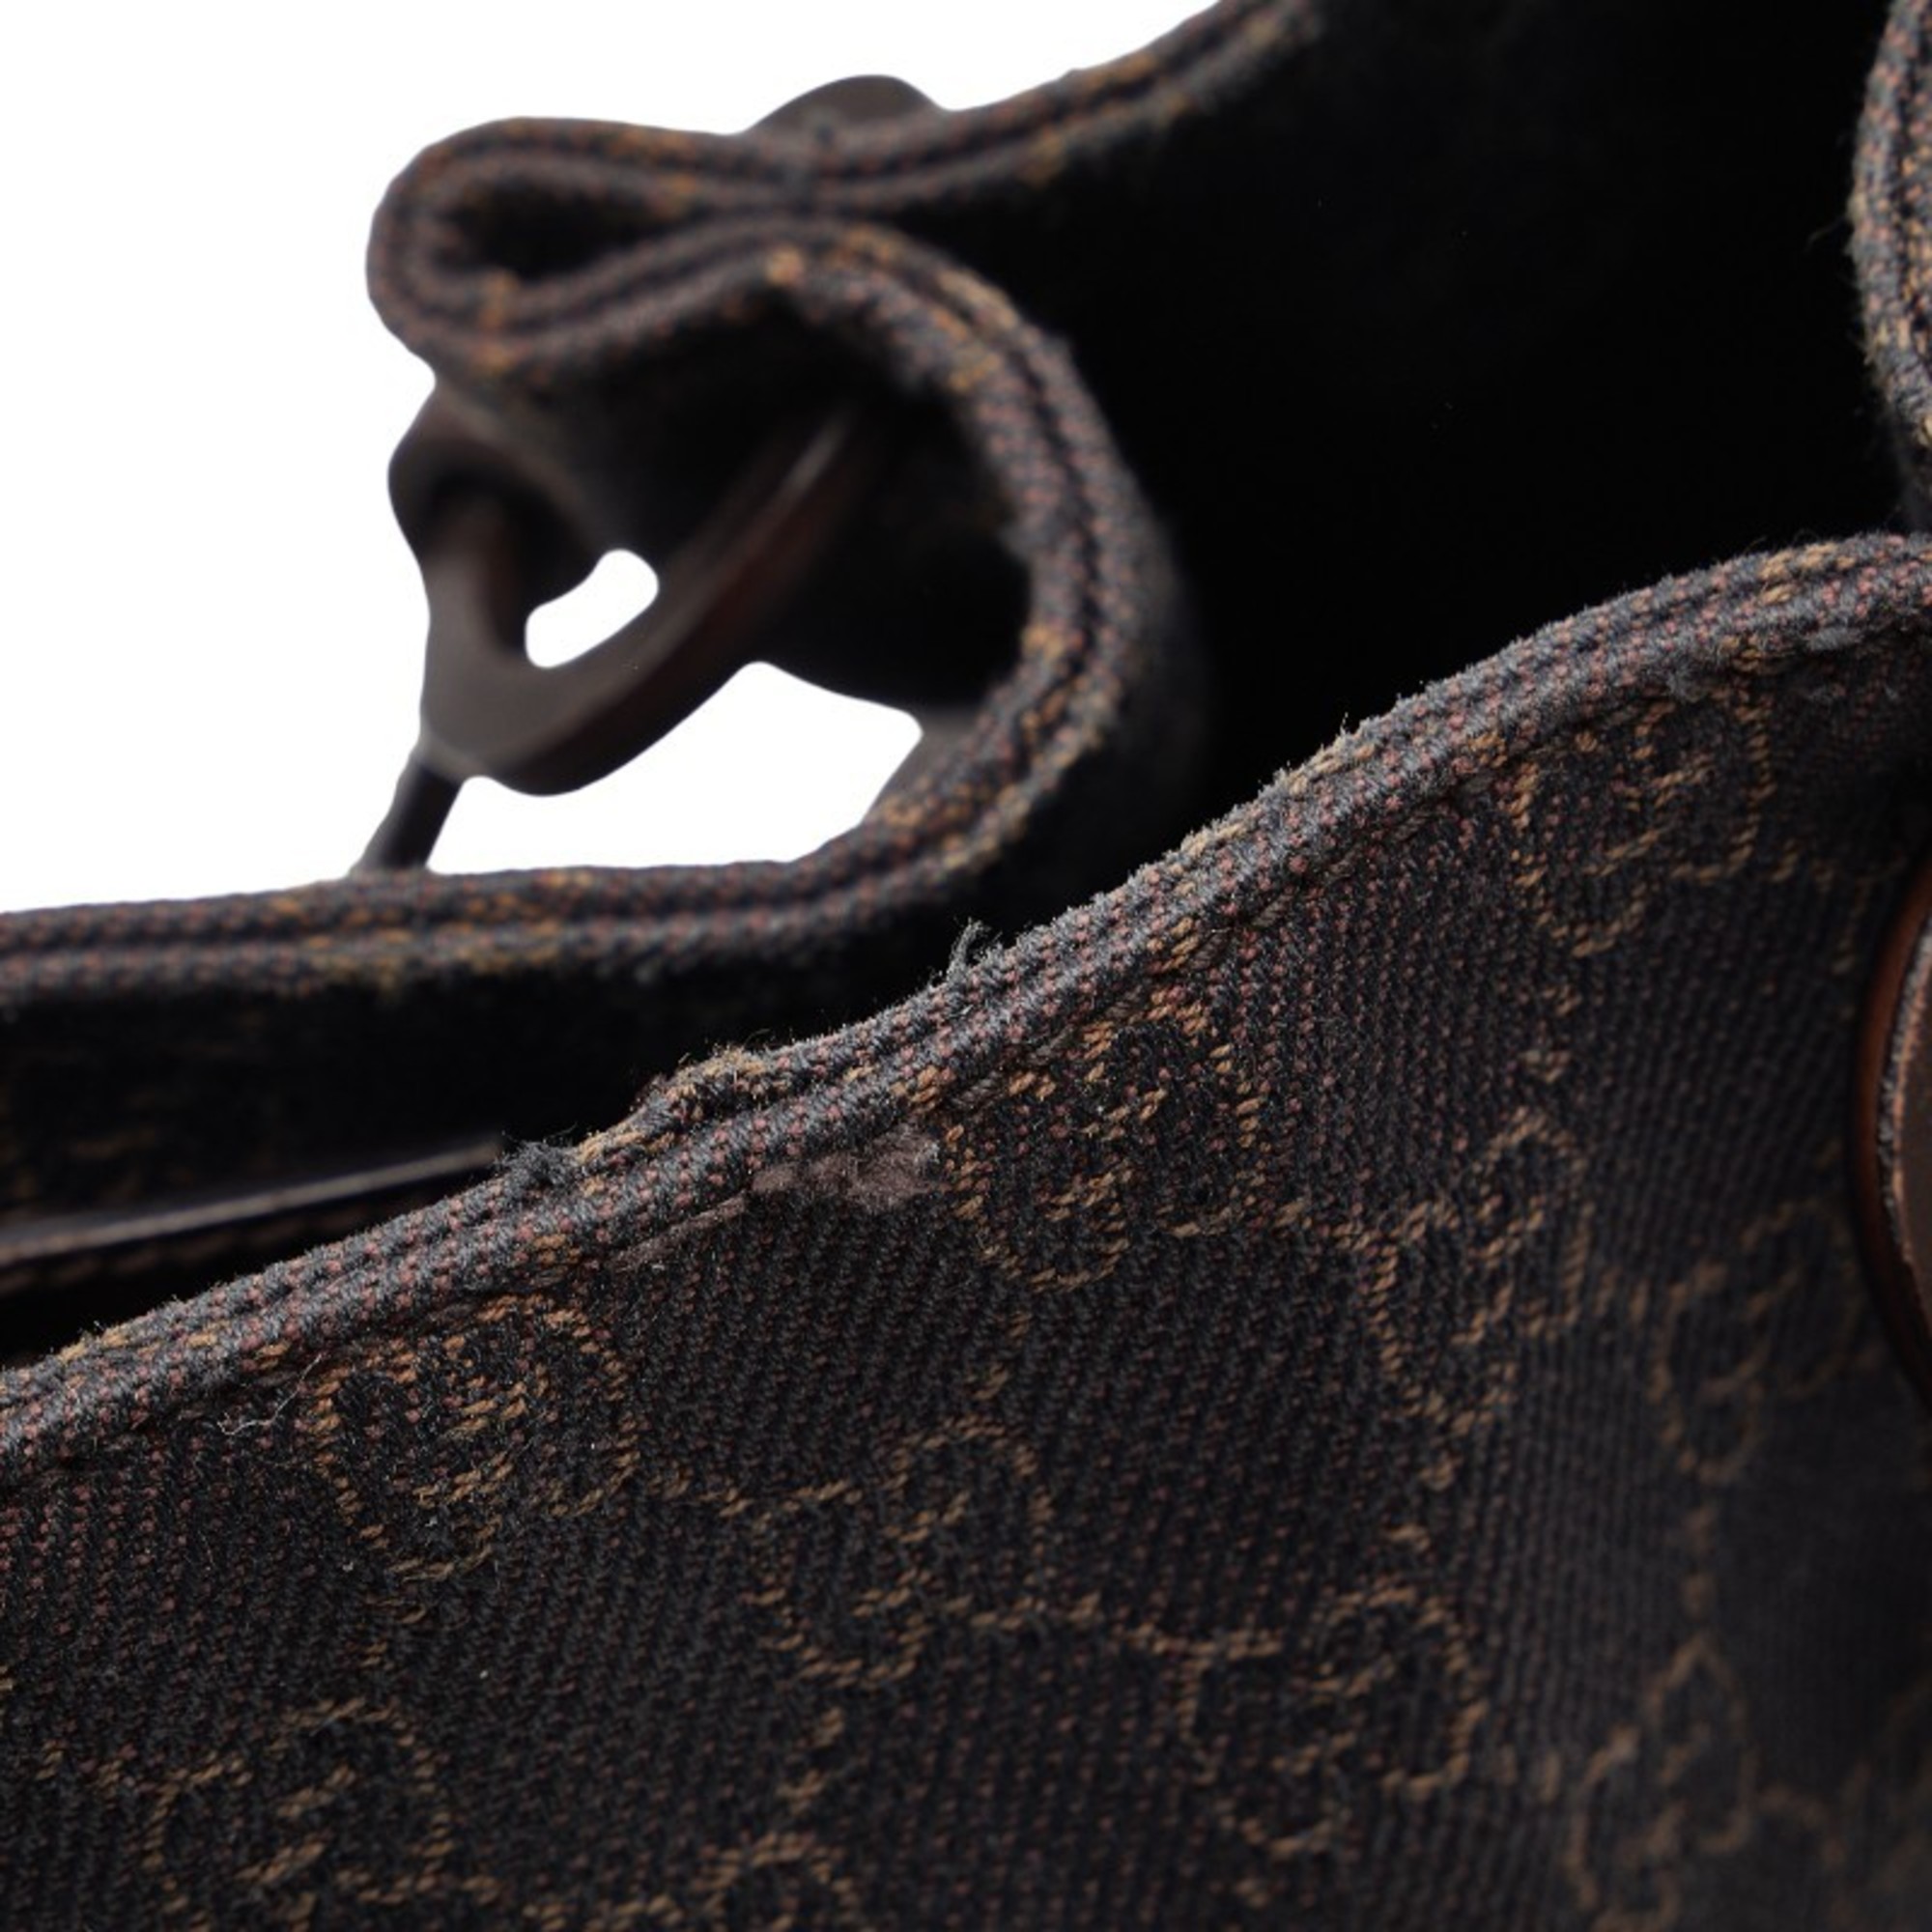 Gucci GG canvas handbag tote bag 101919 brown leather ladies GUCCI